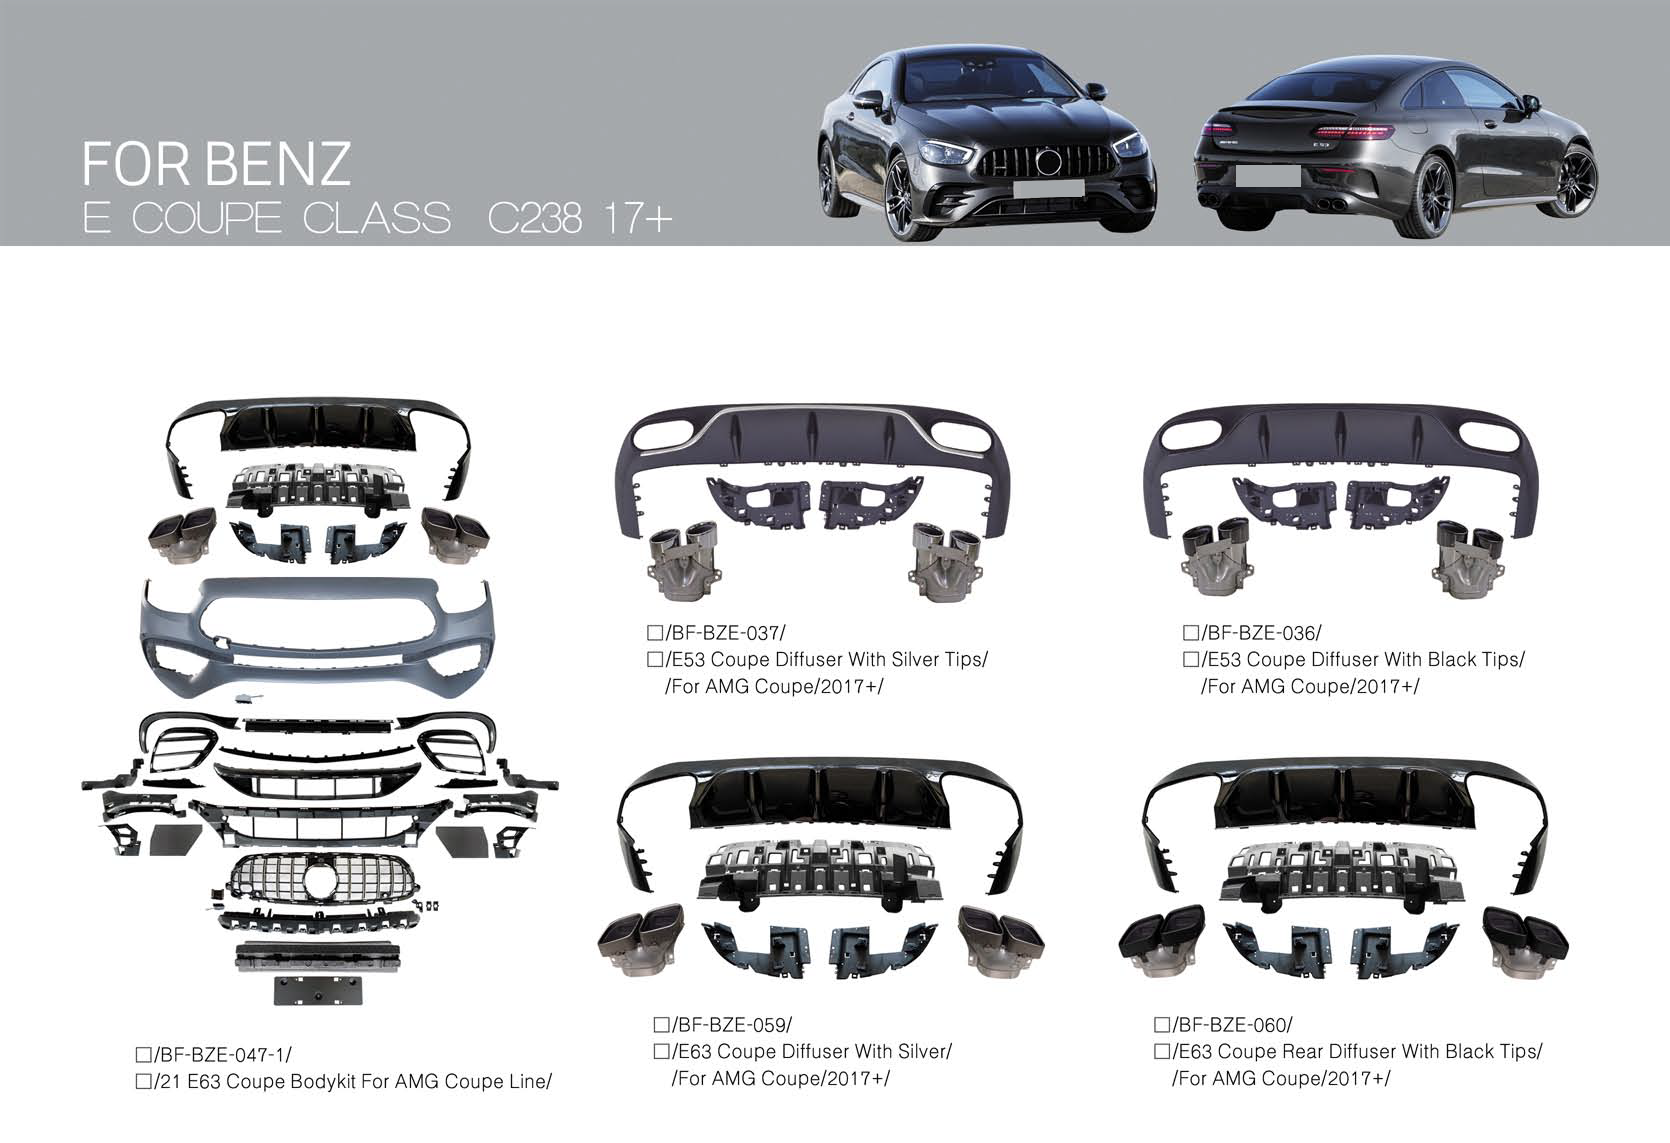 Mercedes Benz S Class W222 2014-2022/W223 2021+, Diffuser